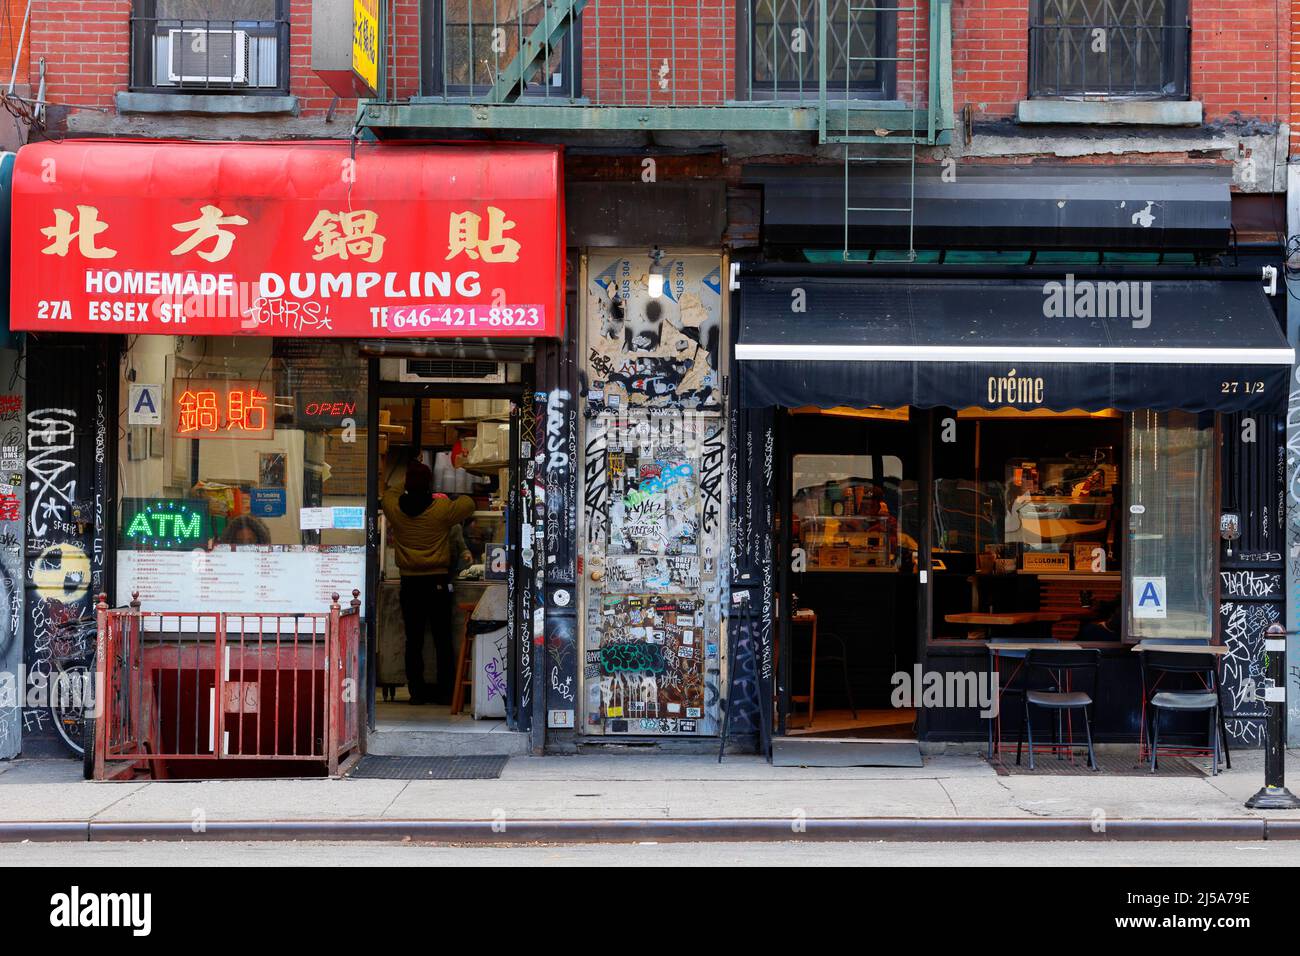 Homemade Dumpling, Creme, 27 Essex St, Nueva York, Nueva York, Nueva York, foto del escaparate de un dumpling frito, y un café matcha en el Lower East Side Foto de stock